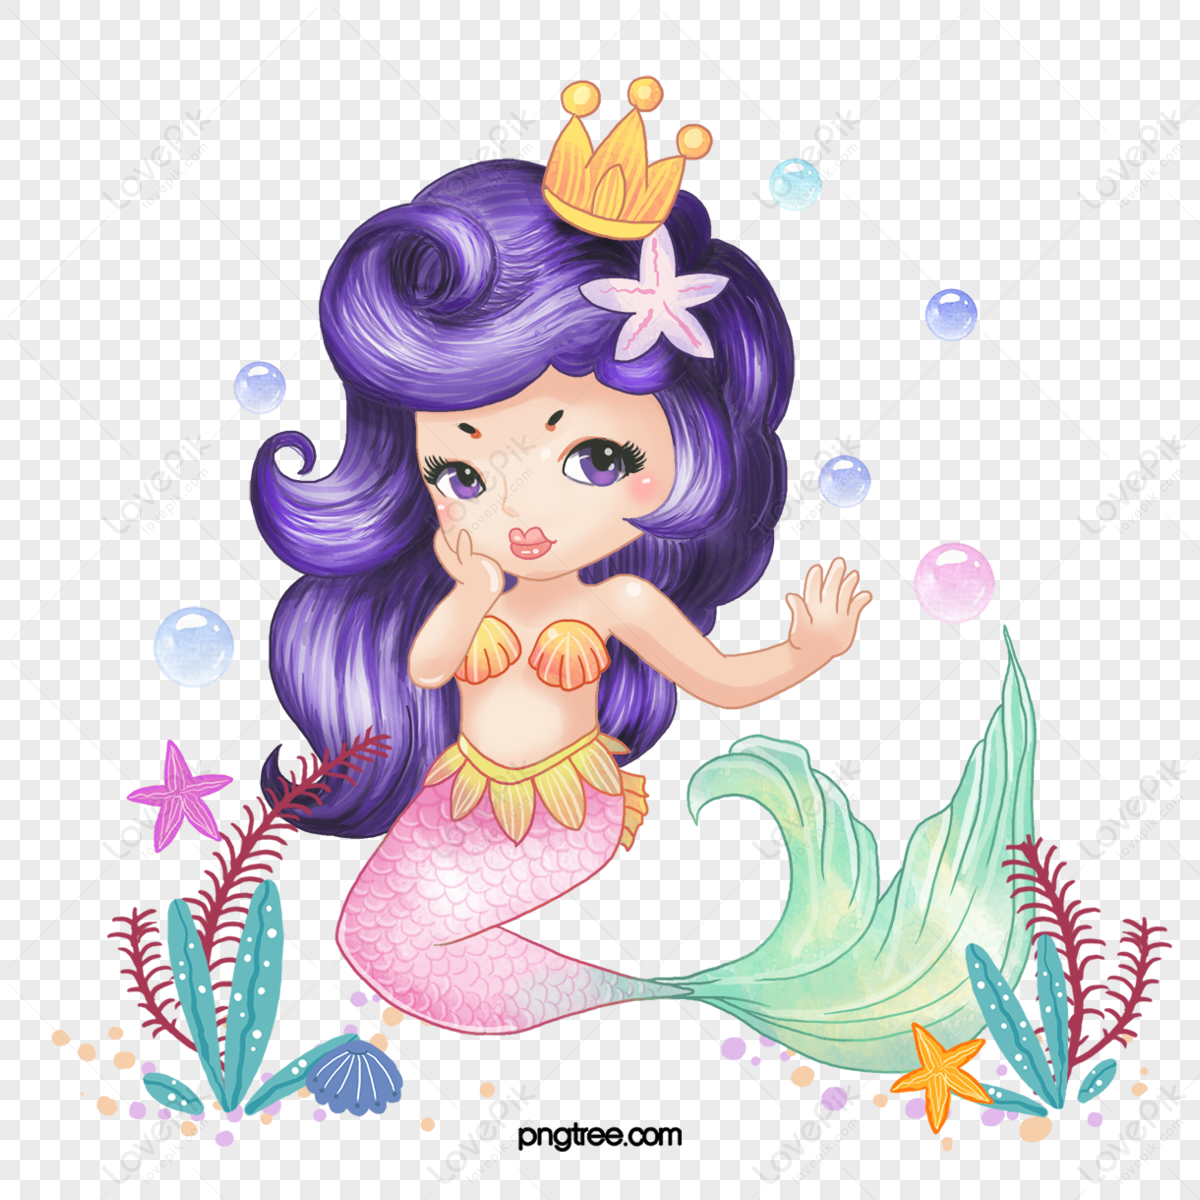 hand drawn cute mermaid princess,illustration,sirens,underwater world png image